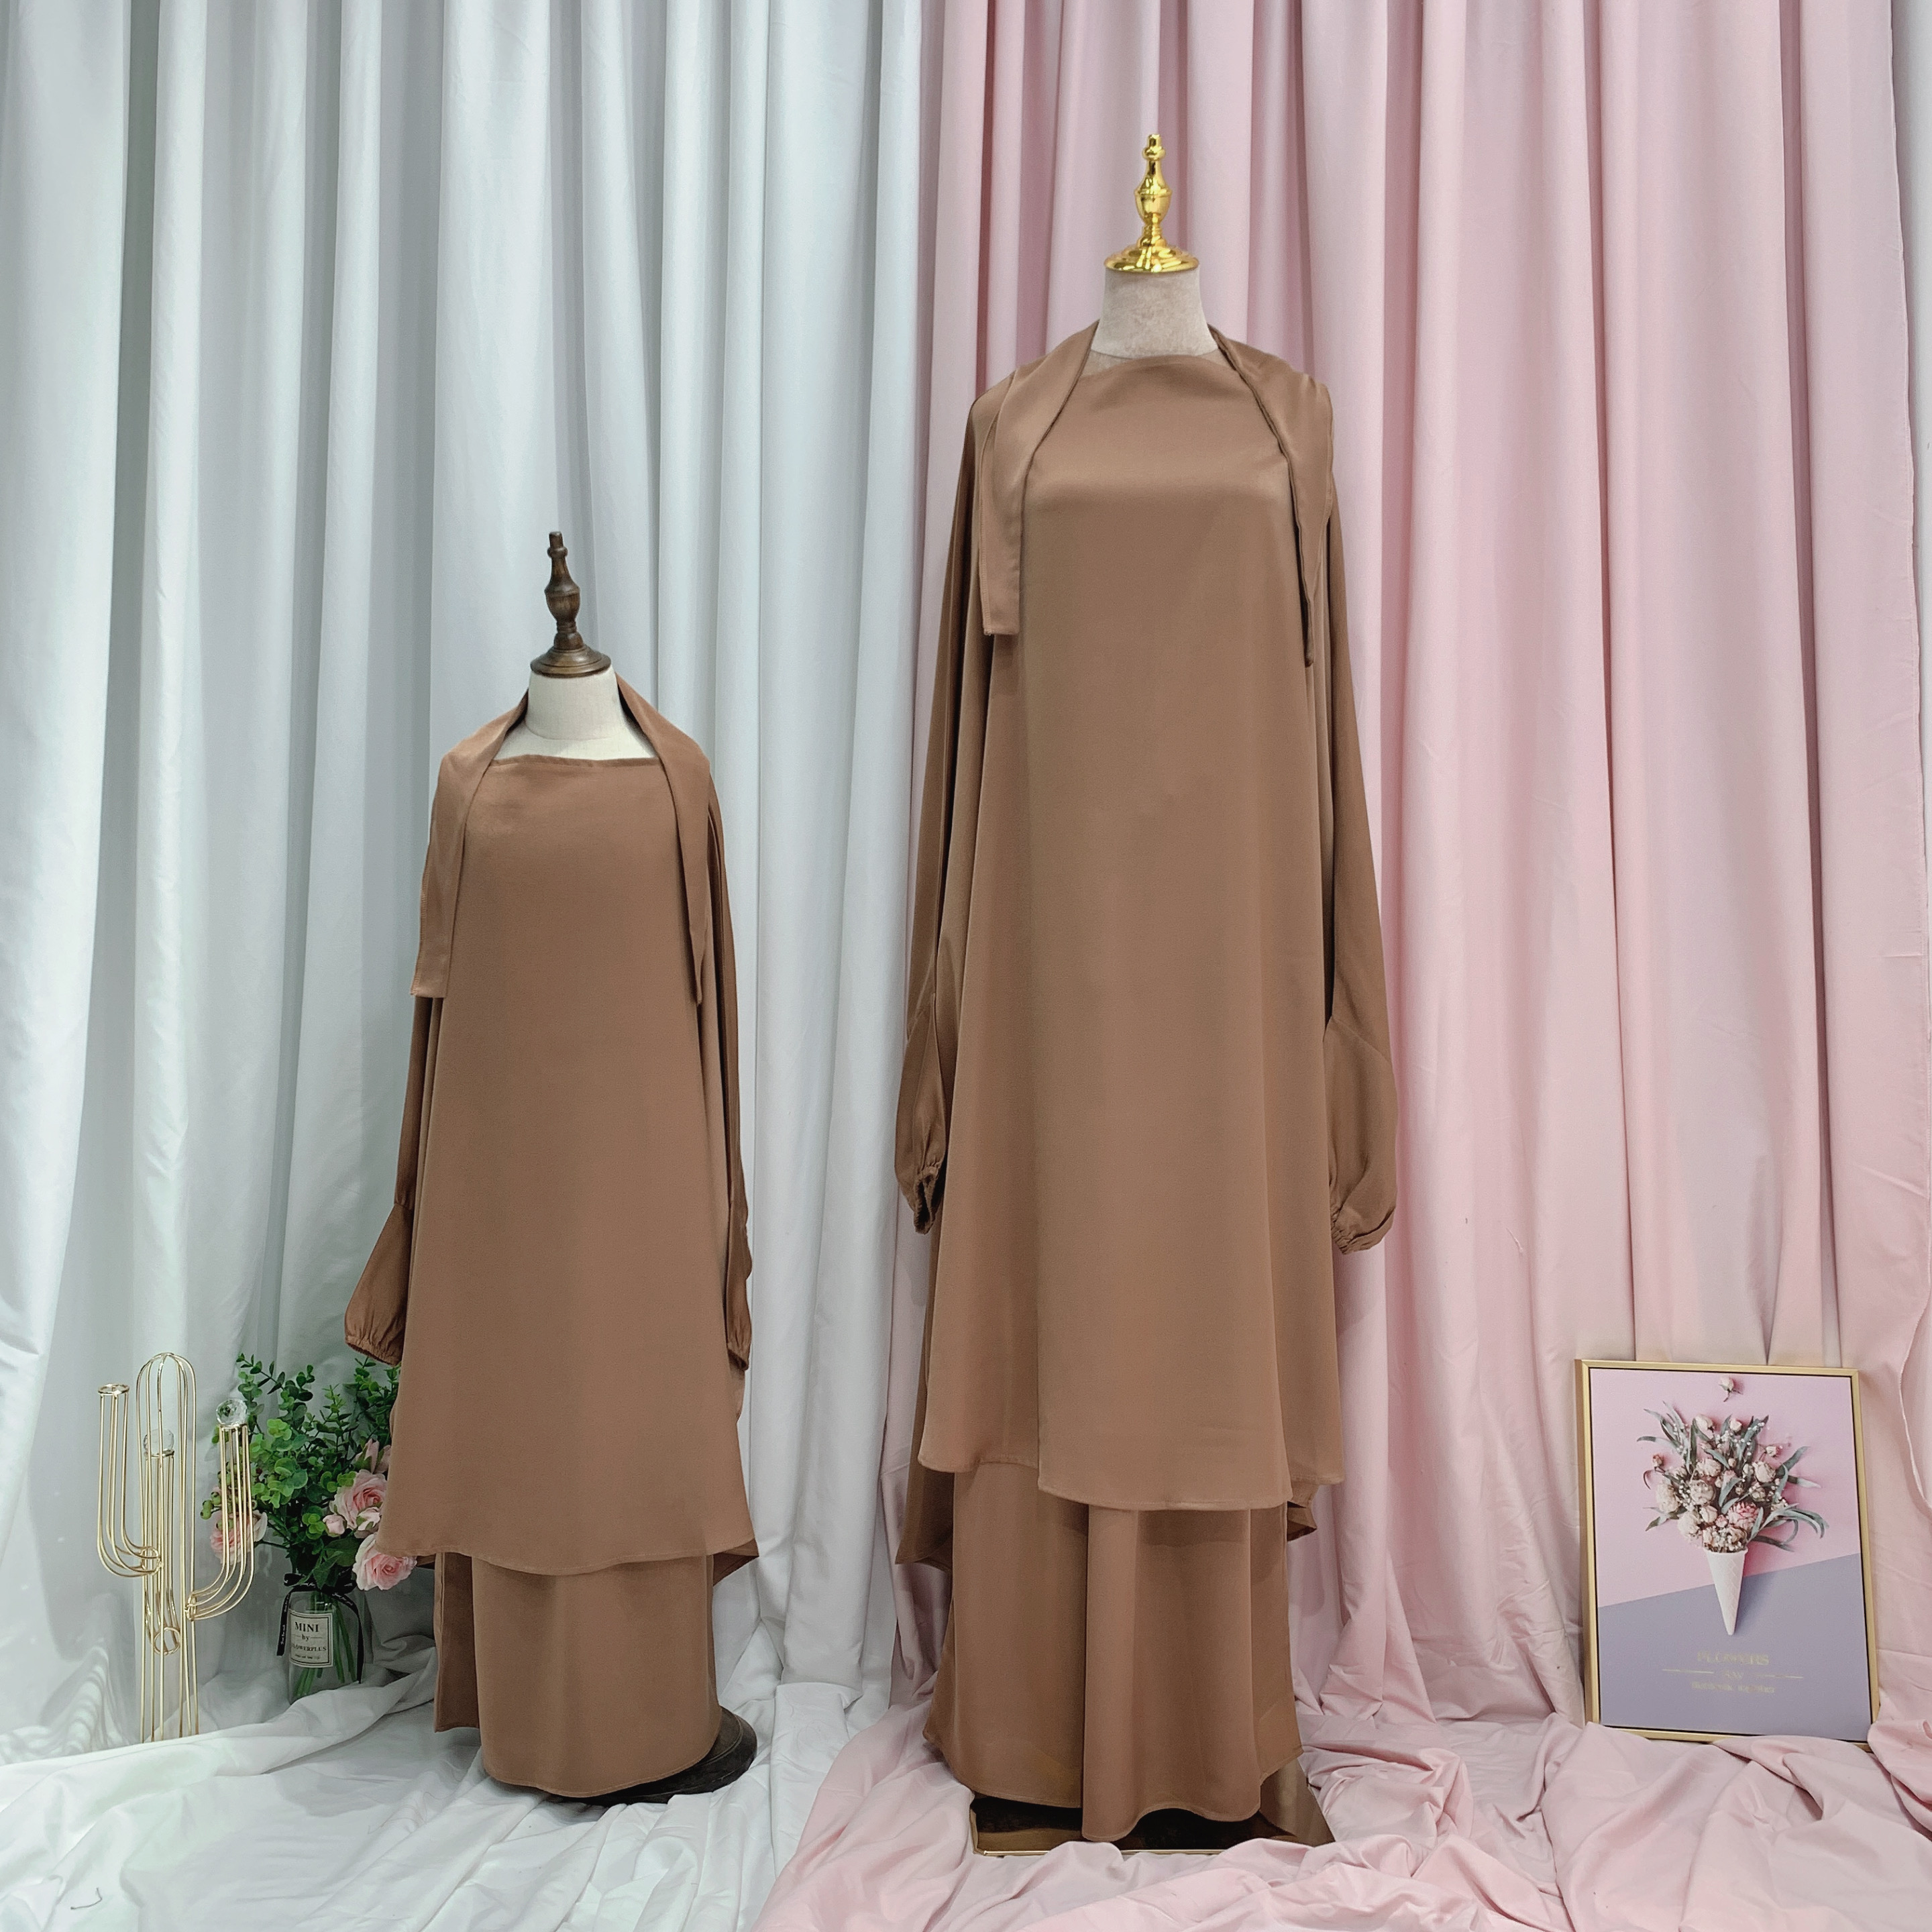 Loriya Fashion Latest New Style Islamic Clothing Flared Elegant Floral Printed Muslim Modest Dresses